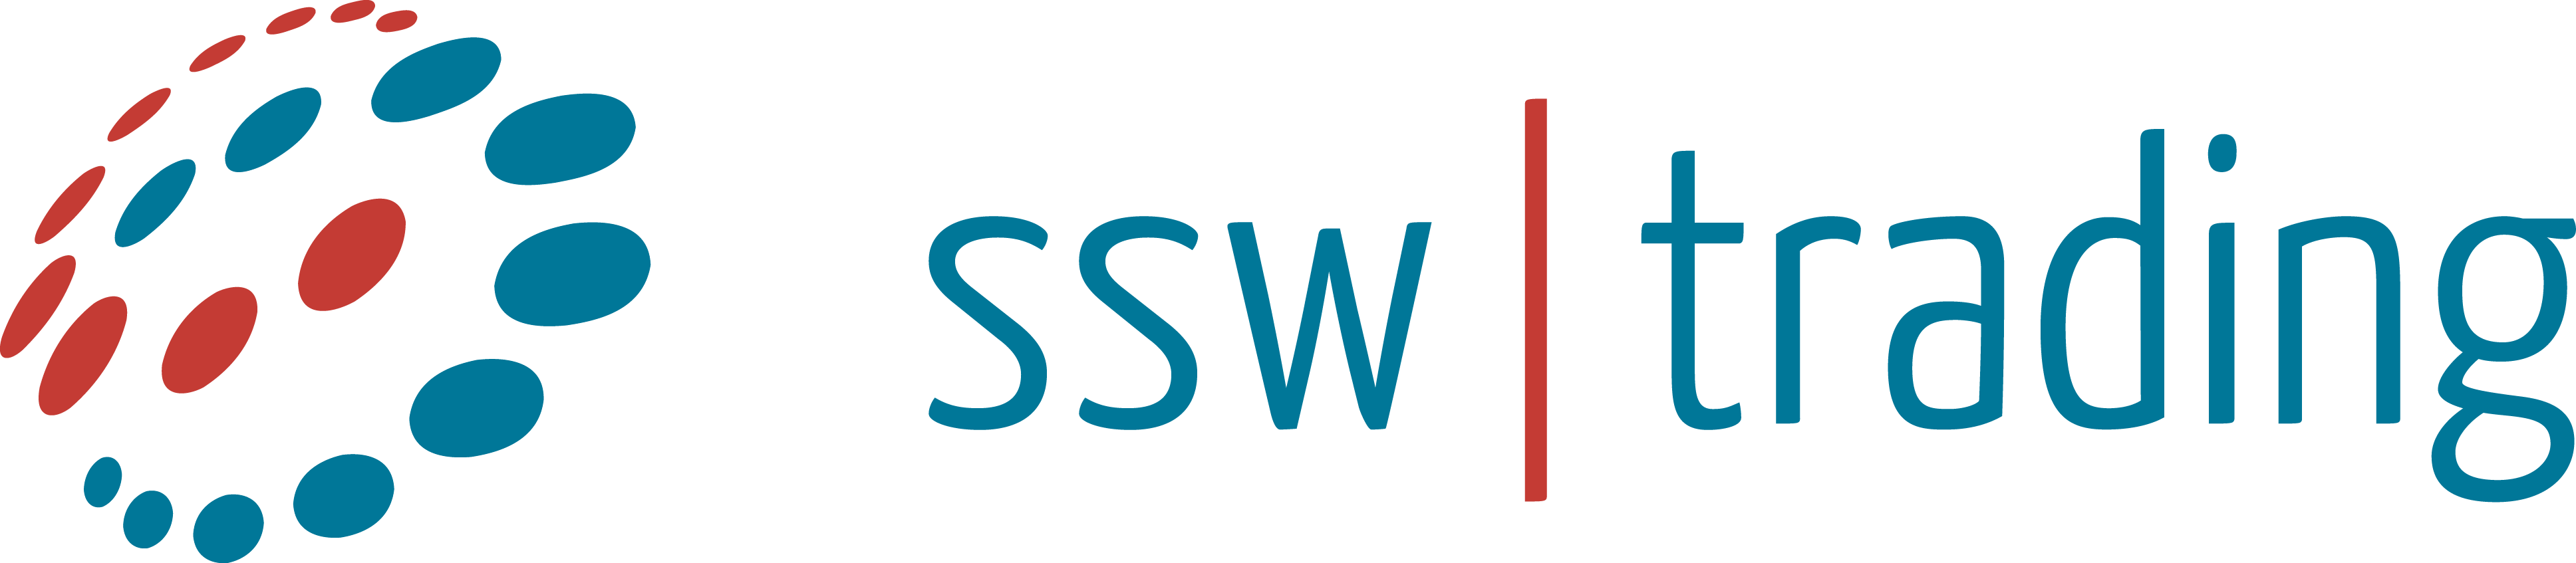 SSW-Trading GmbH